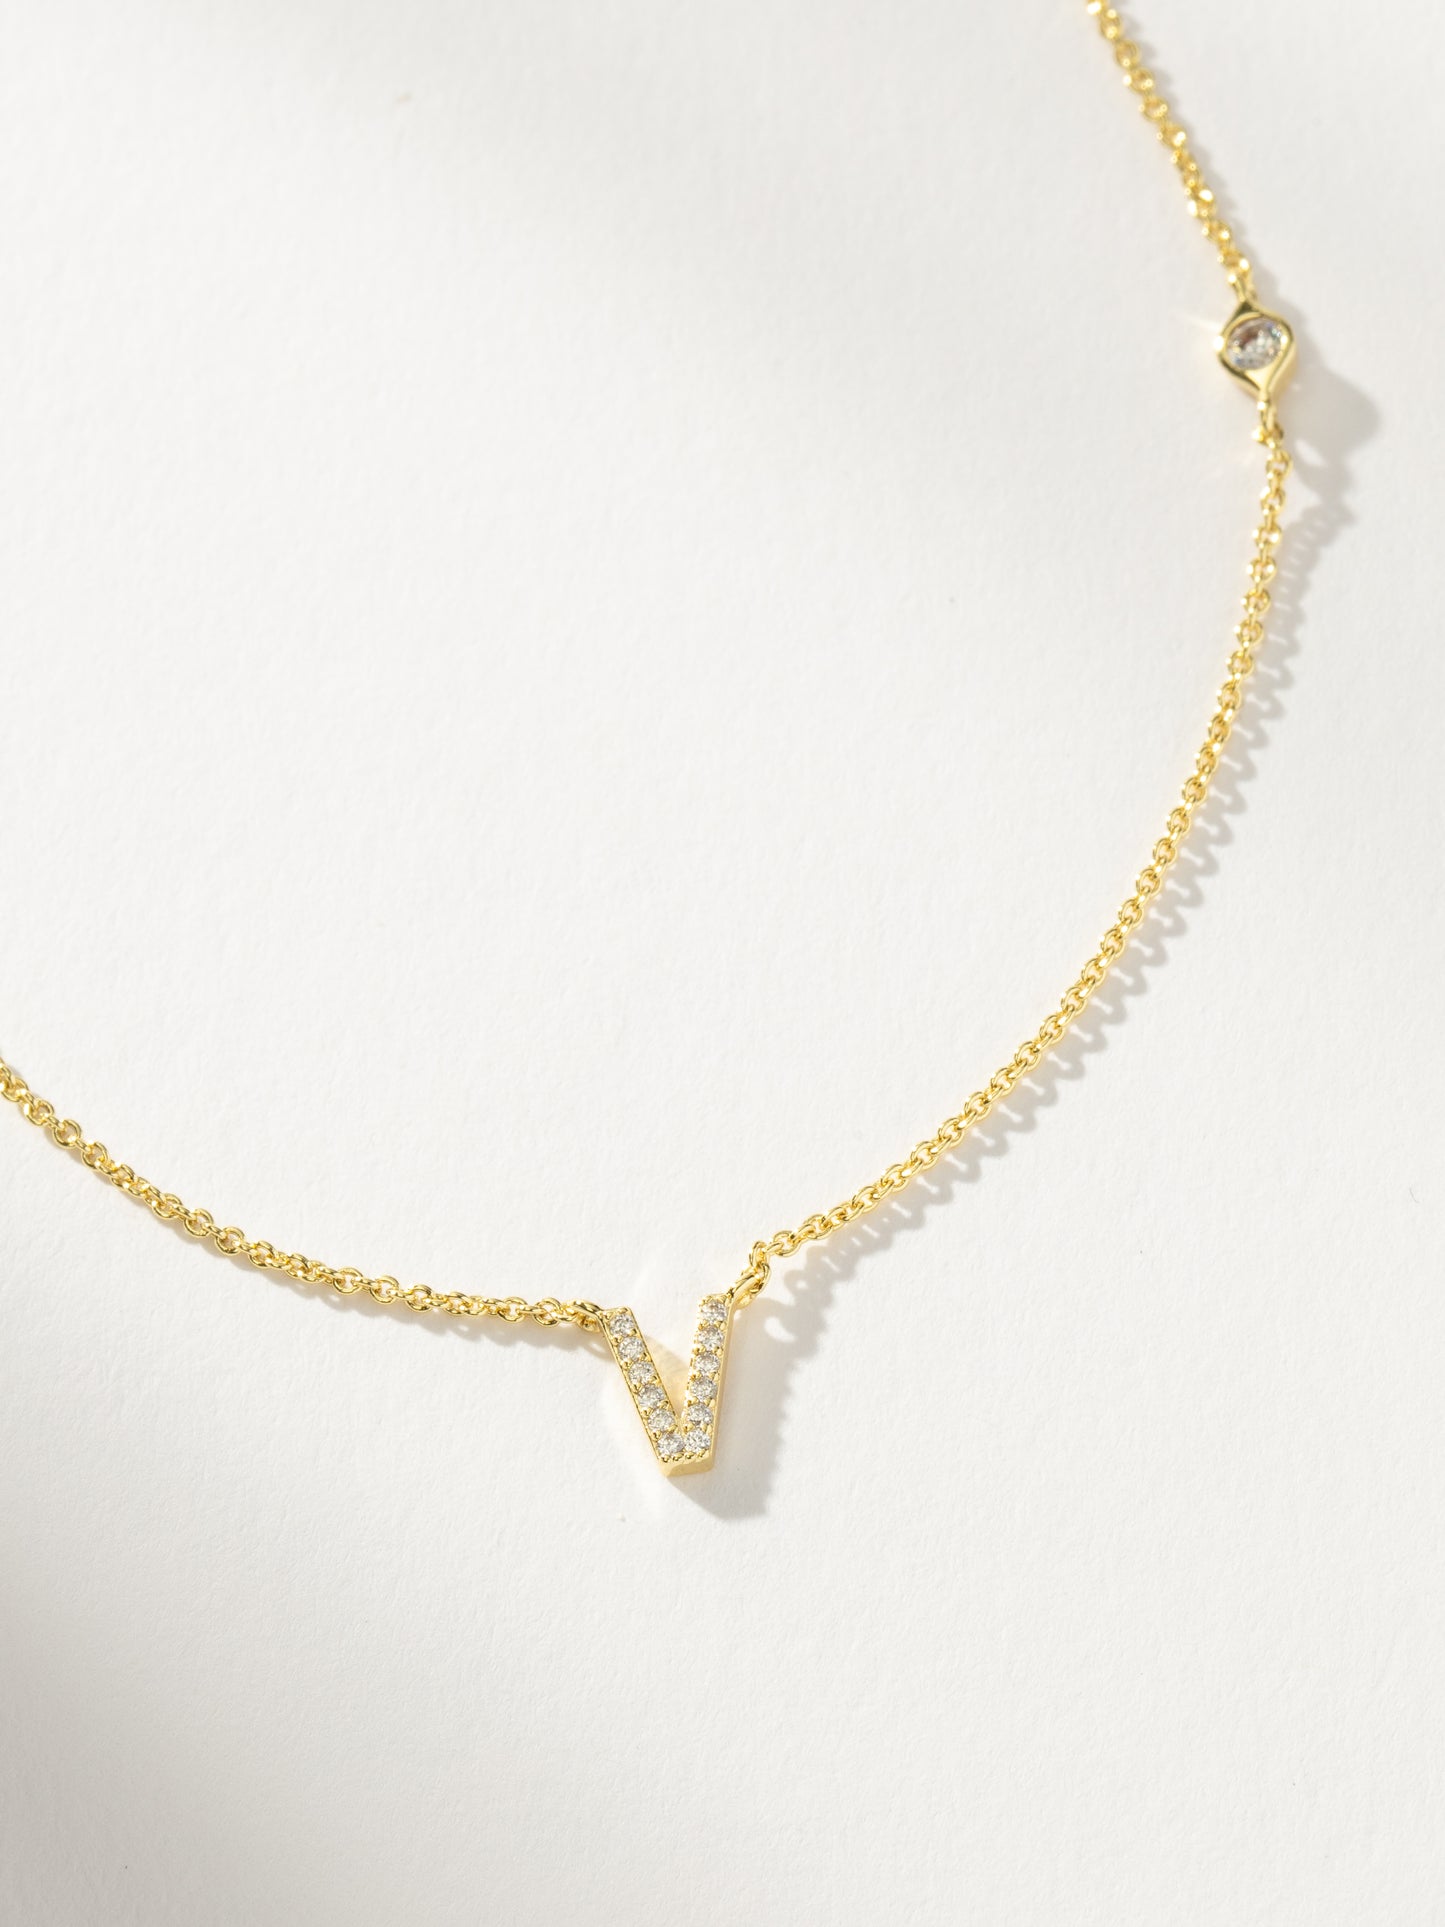 Pavé Initial Necklace | Gold V | Product Detail Image | Uncommon James